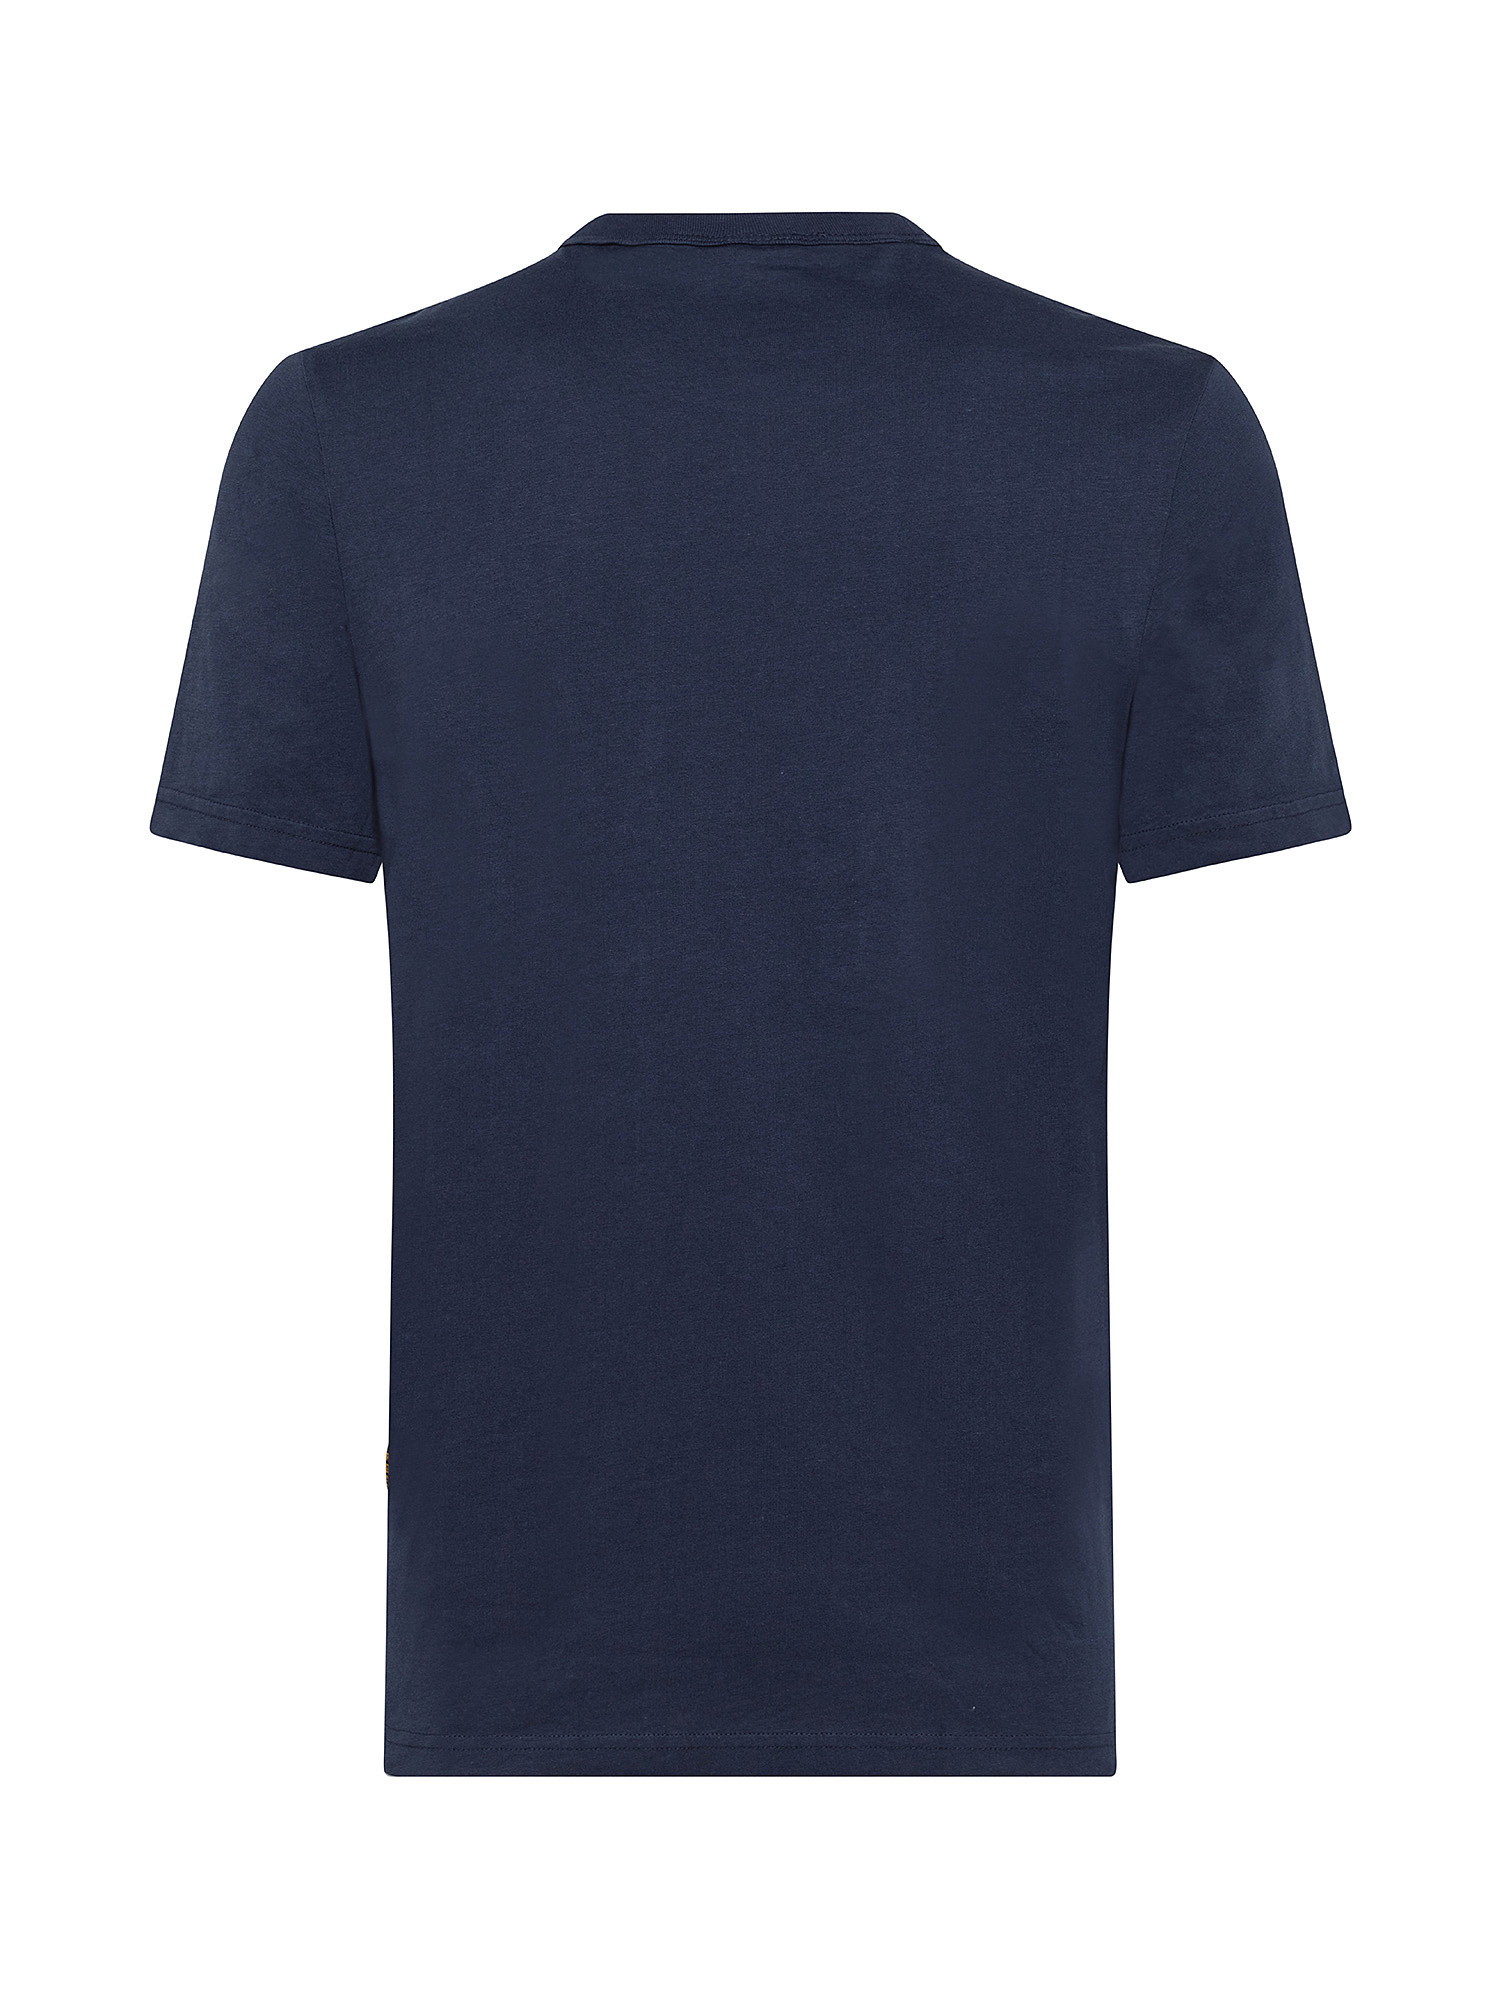 Raw slim graphic t-shirt, Blue, large image number 1